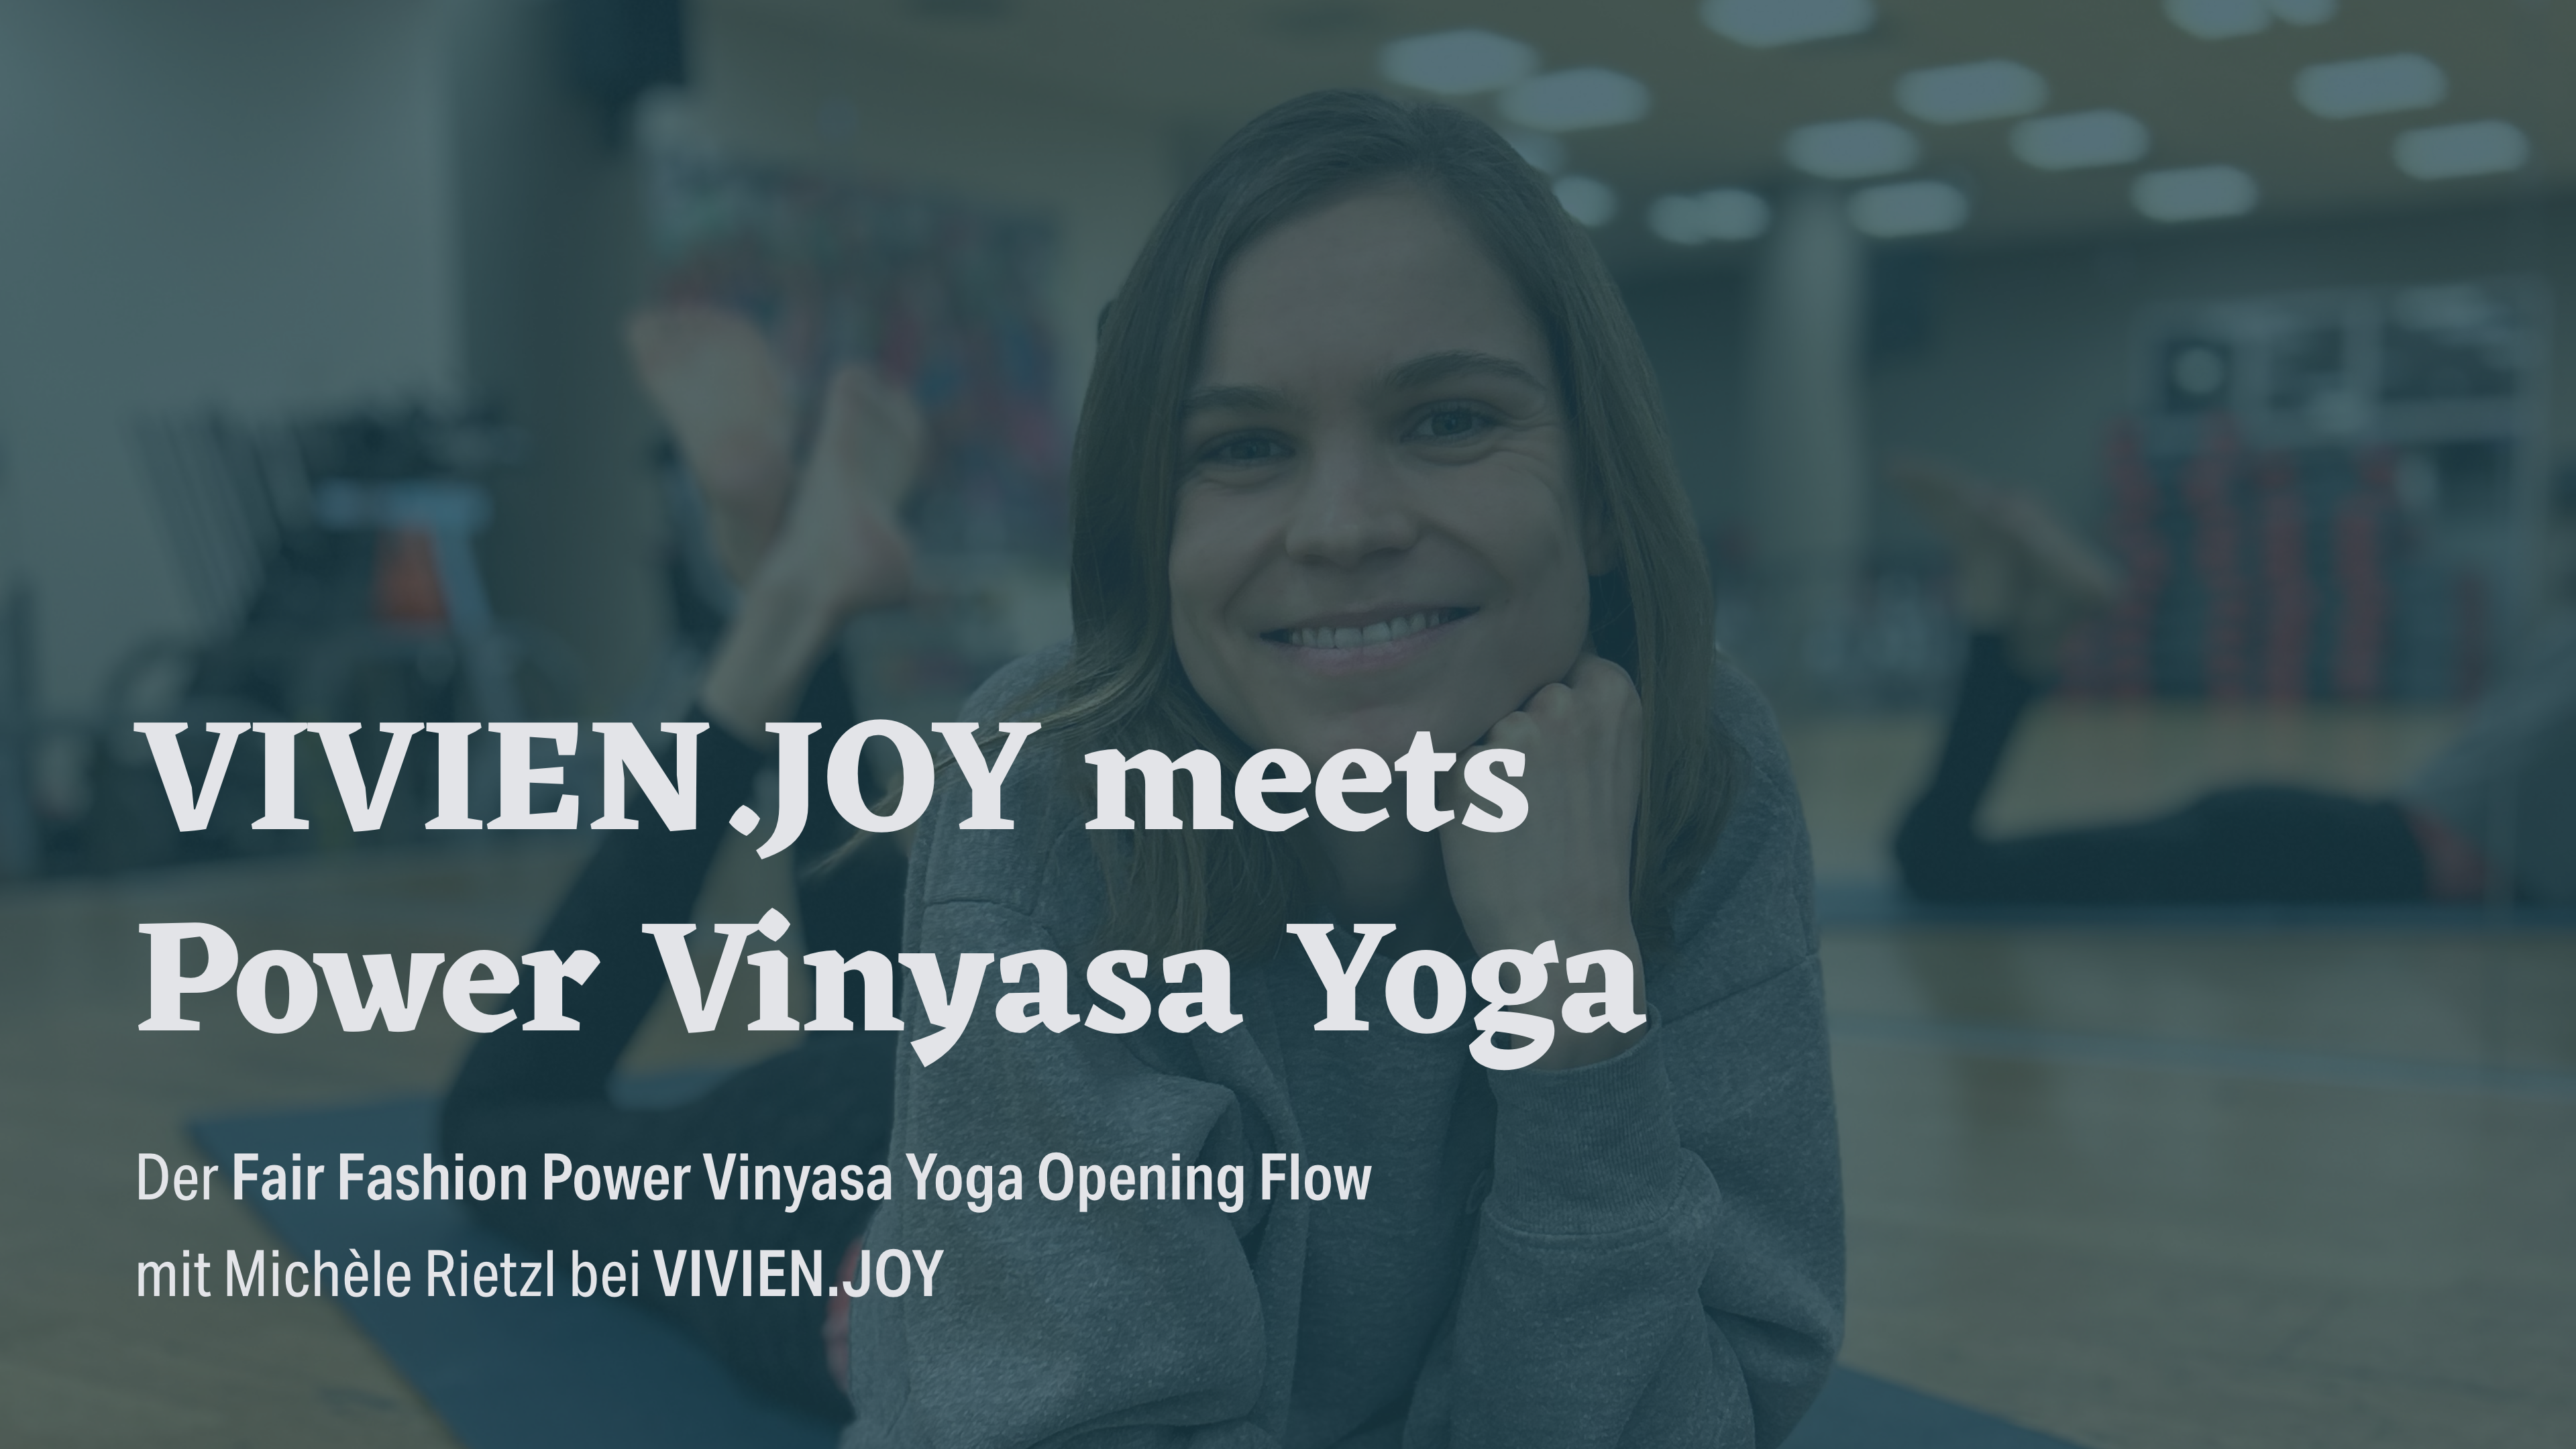 Power Vinyasa Yoga in Karlsruhe mit mk rietzl